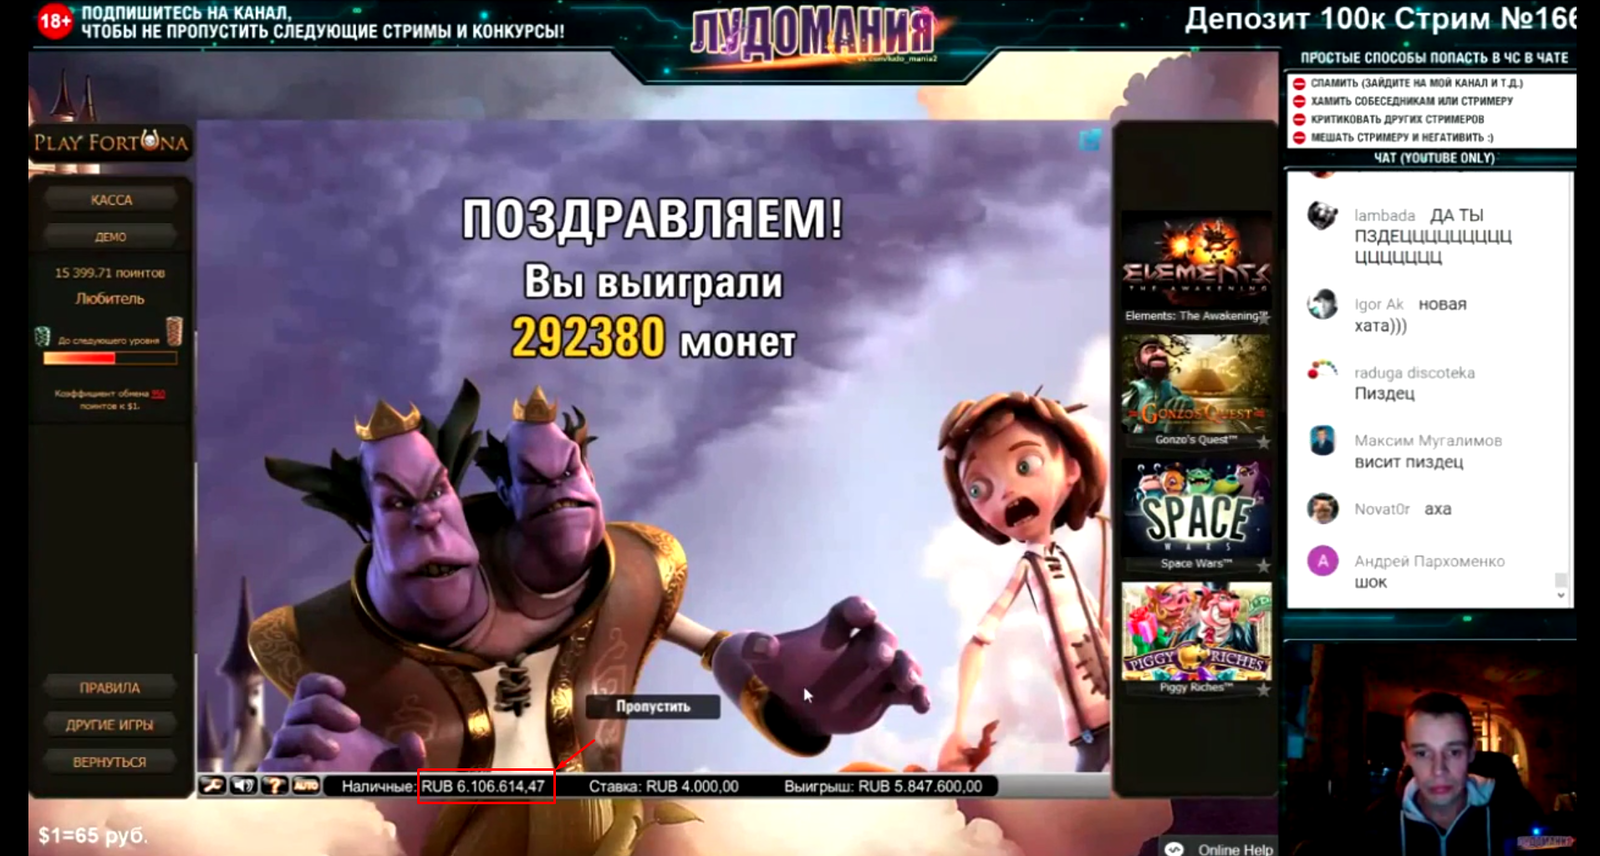 Ludoman-streamer won 6,000,000 rubles live - My, Winnings, , Million, Millions, Стрим, Ether, Streamers, , Ludomania